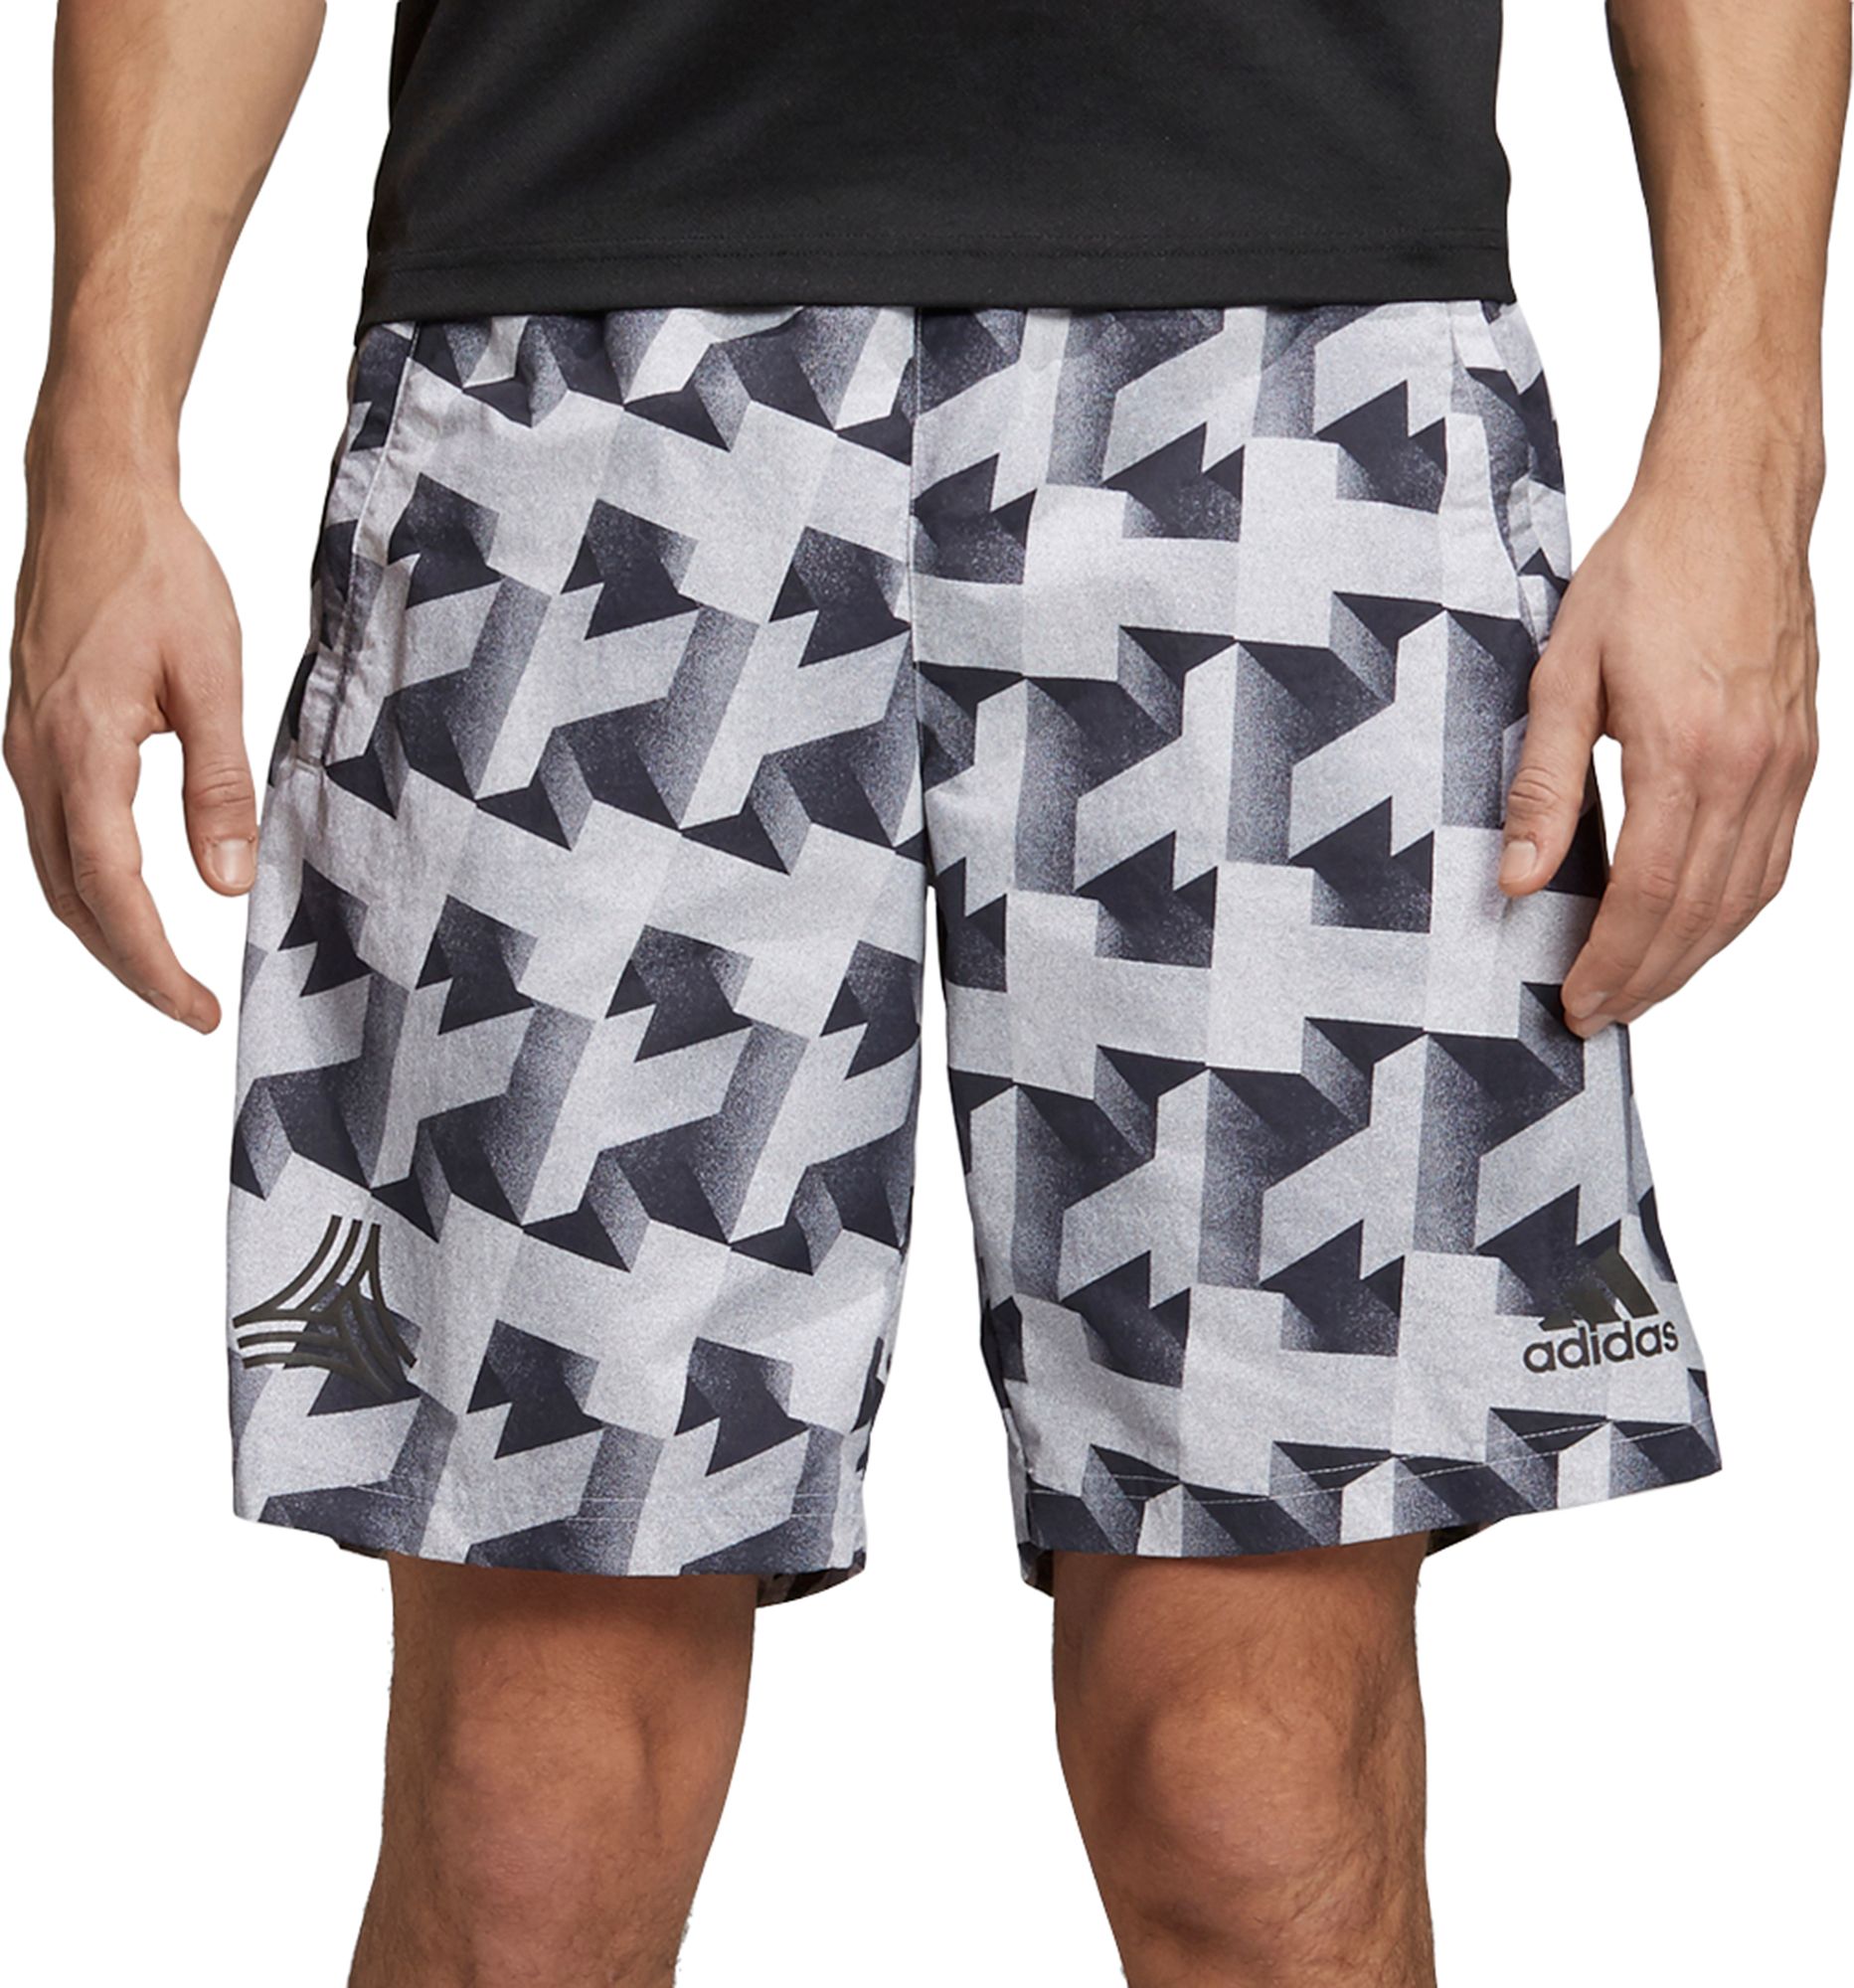 adidas originals all over print shorts